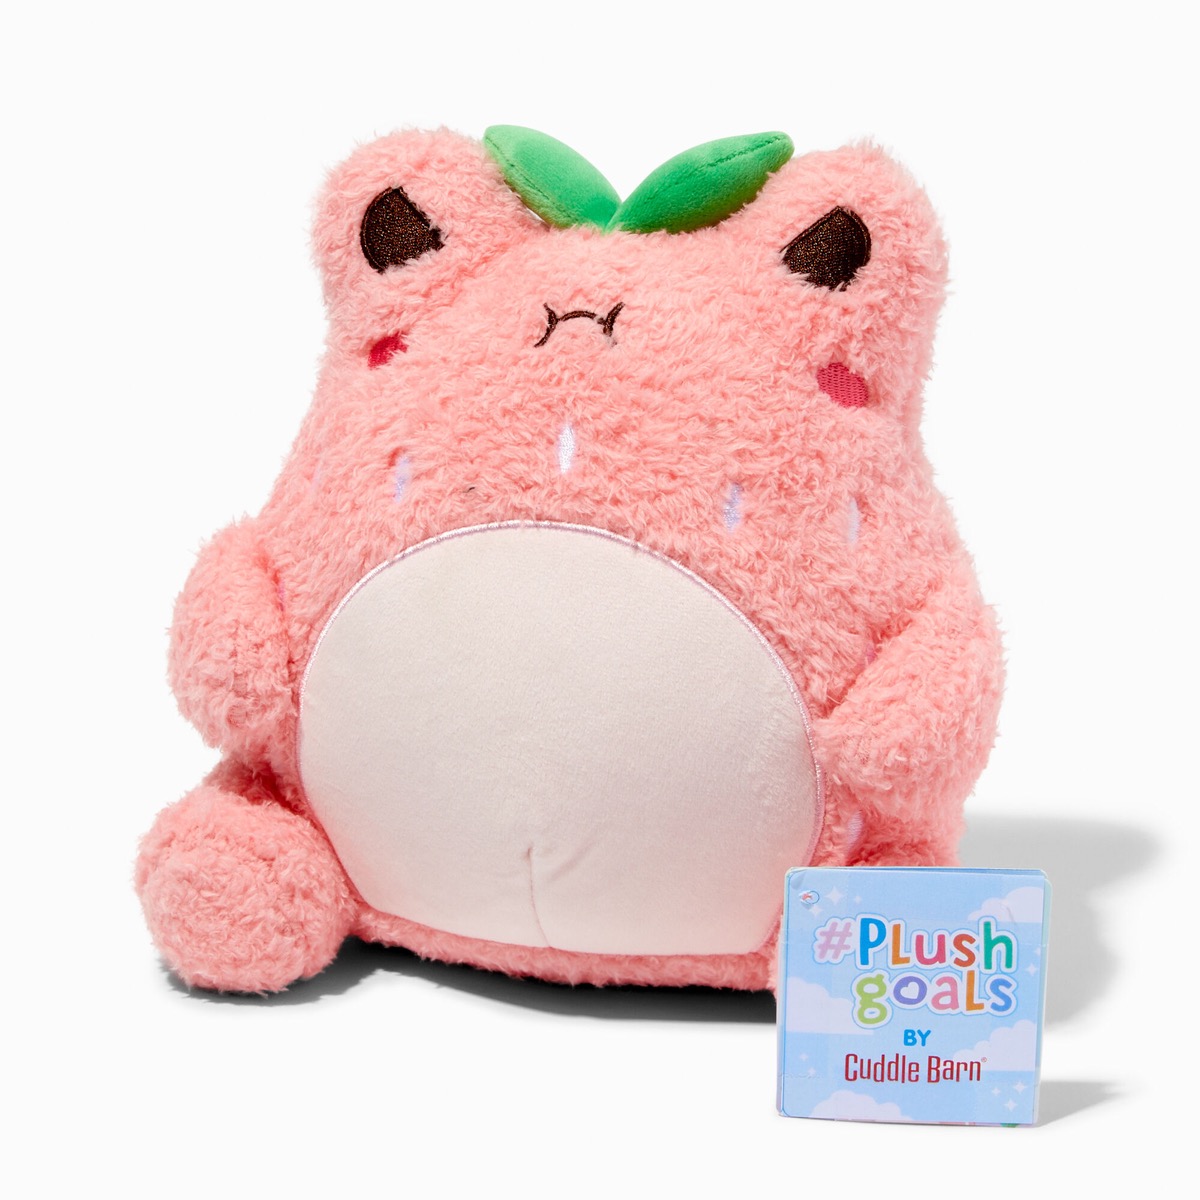 Plush Goals by Cuddle Barn - Plush Toy Strawberry